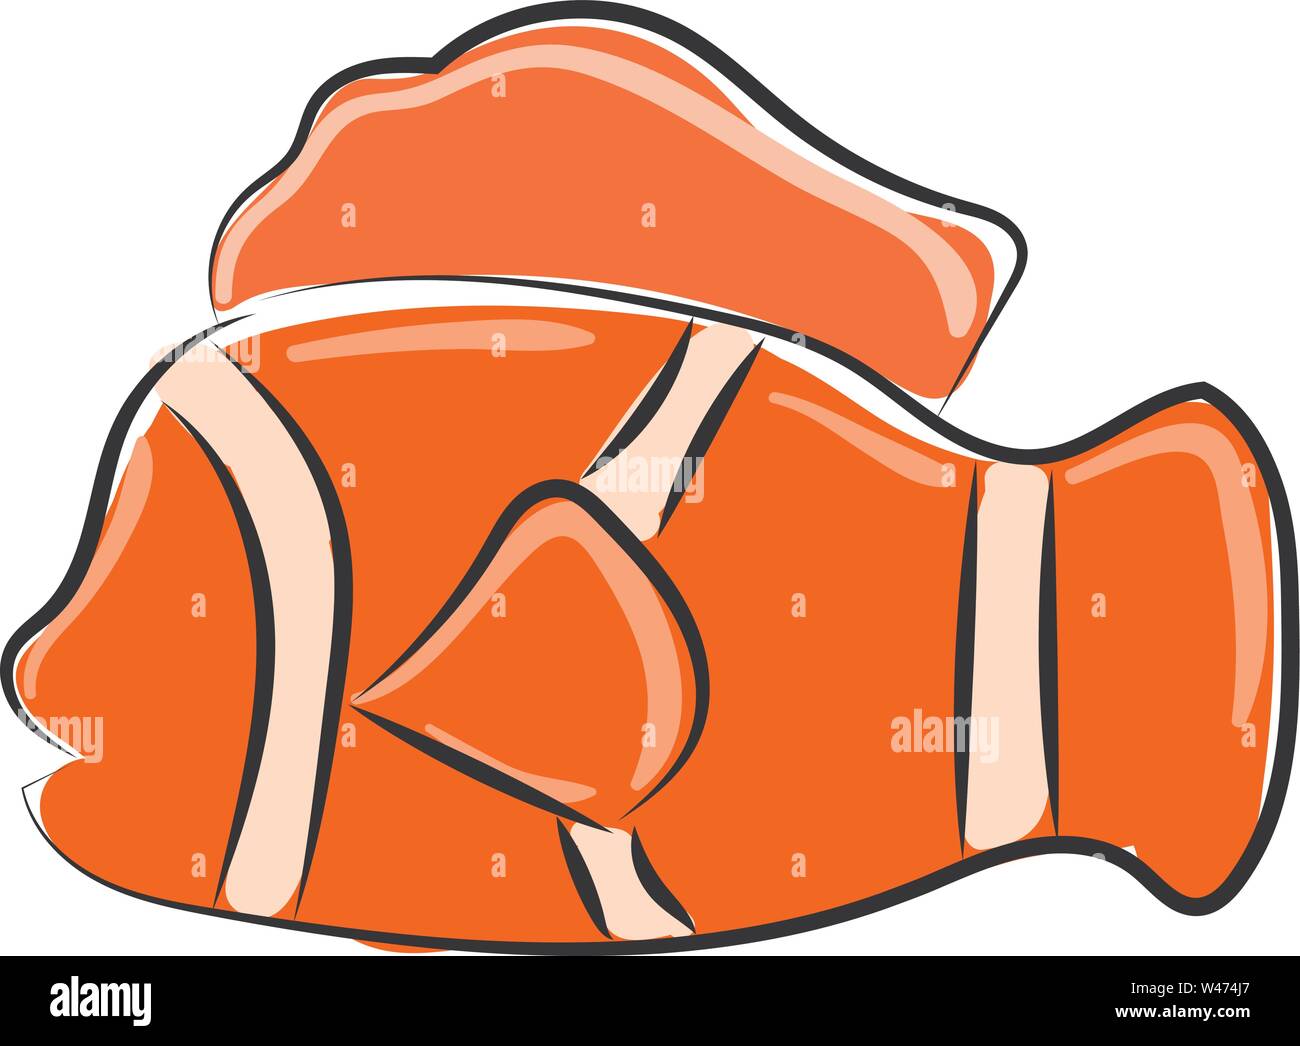 Clown fish, illustration, vector on white background. Stock Vector